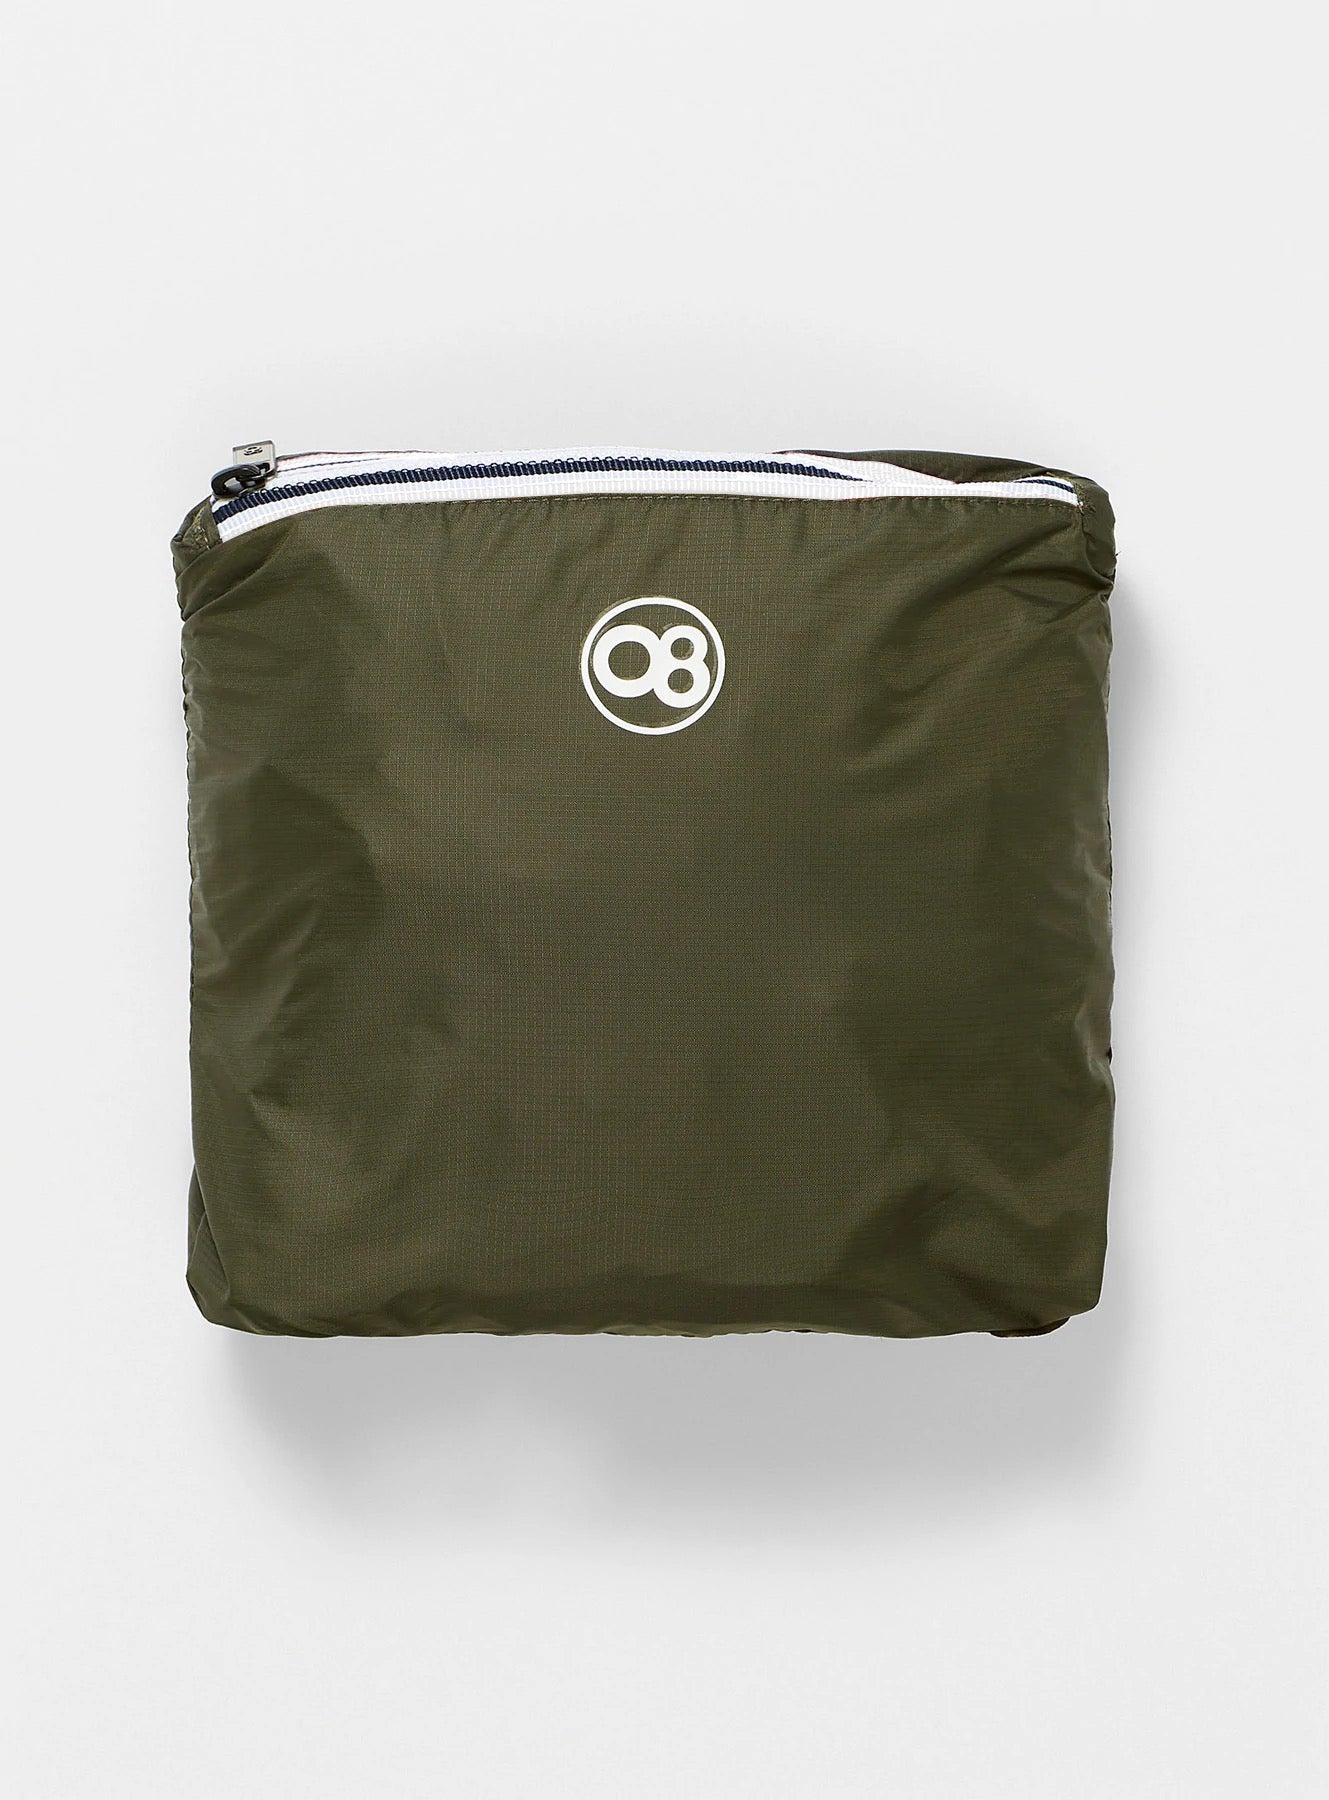 Torba Full Zip Packable Rain Jacket and windbreaker - O8Lifestyle